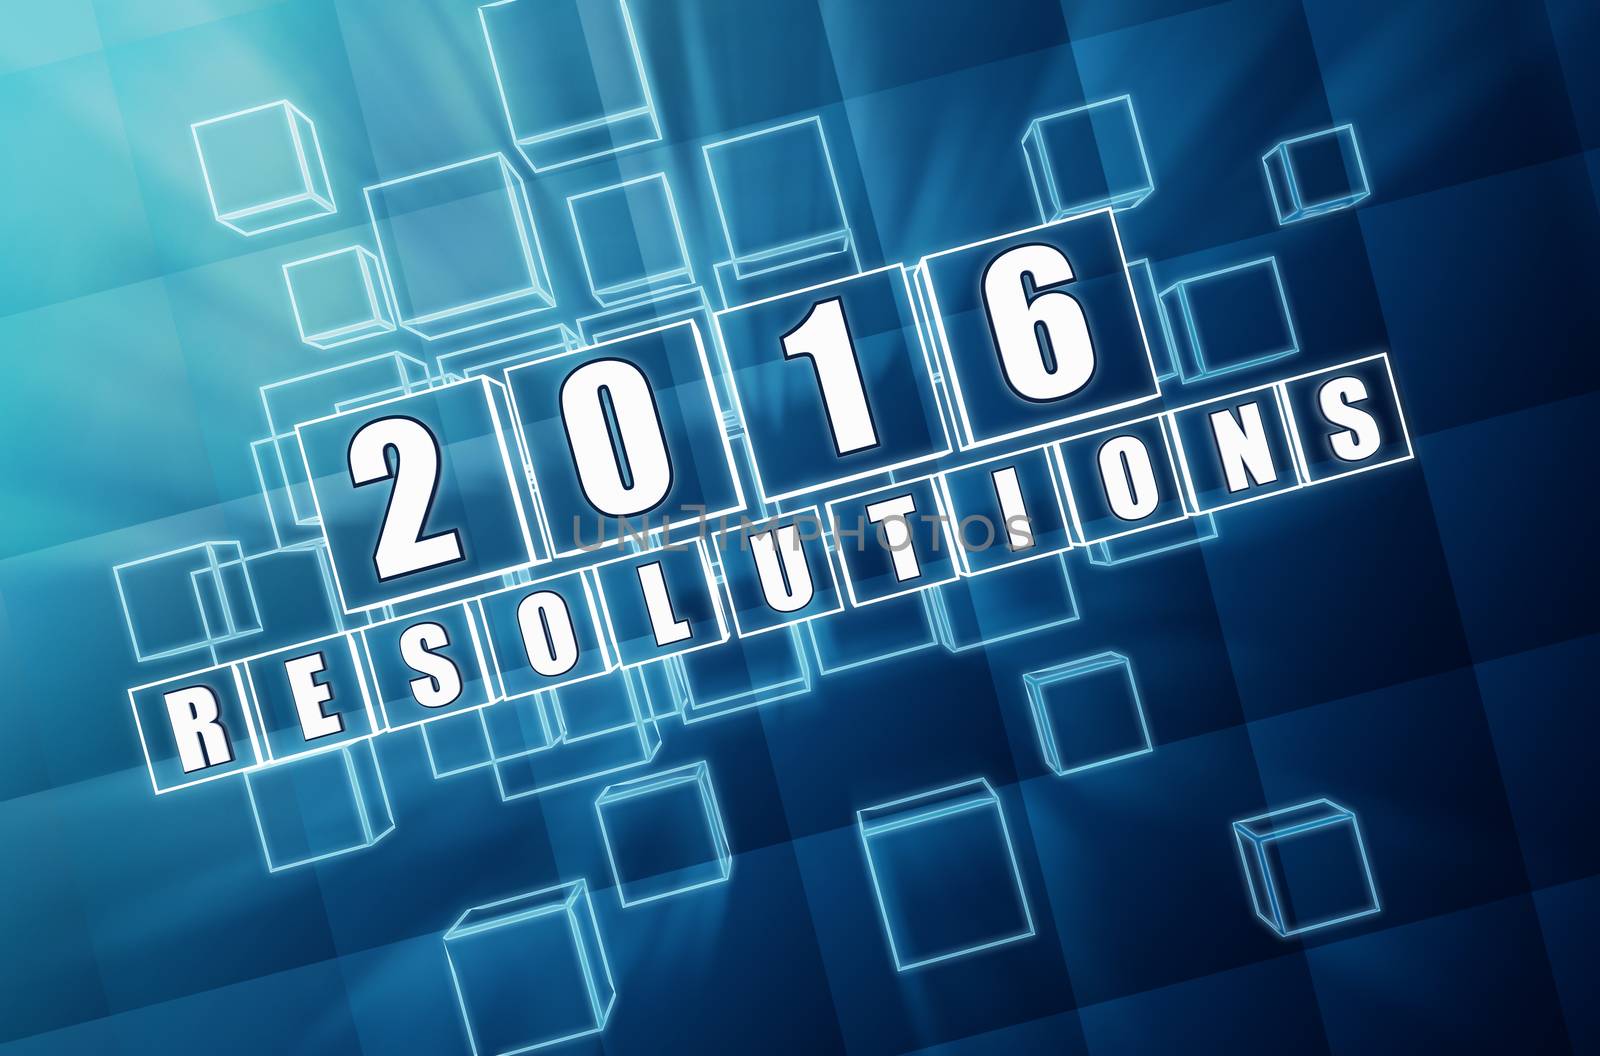 new year 2016 resolutions in blue glass blocks by marinini